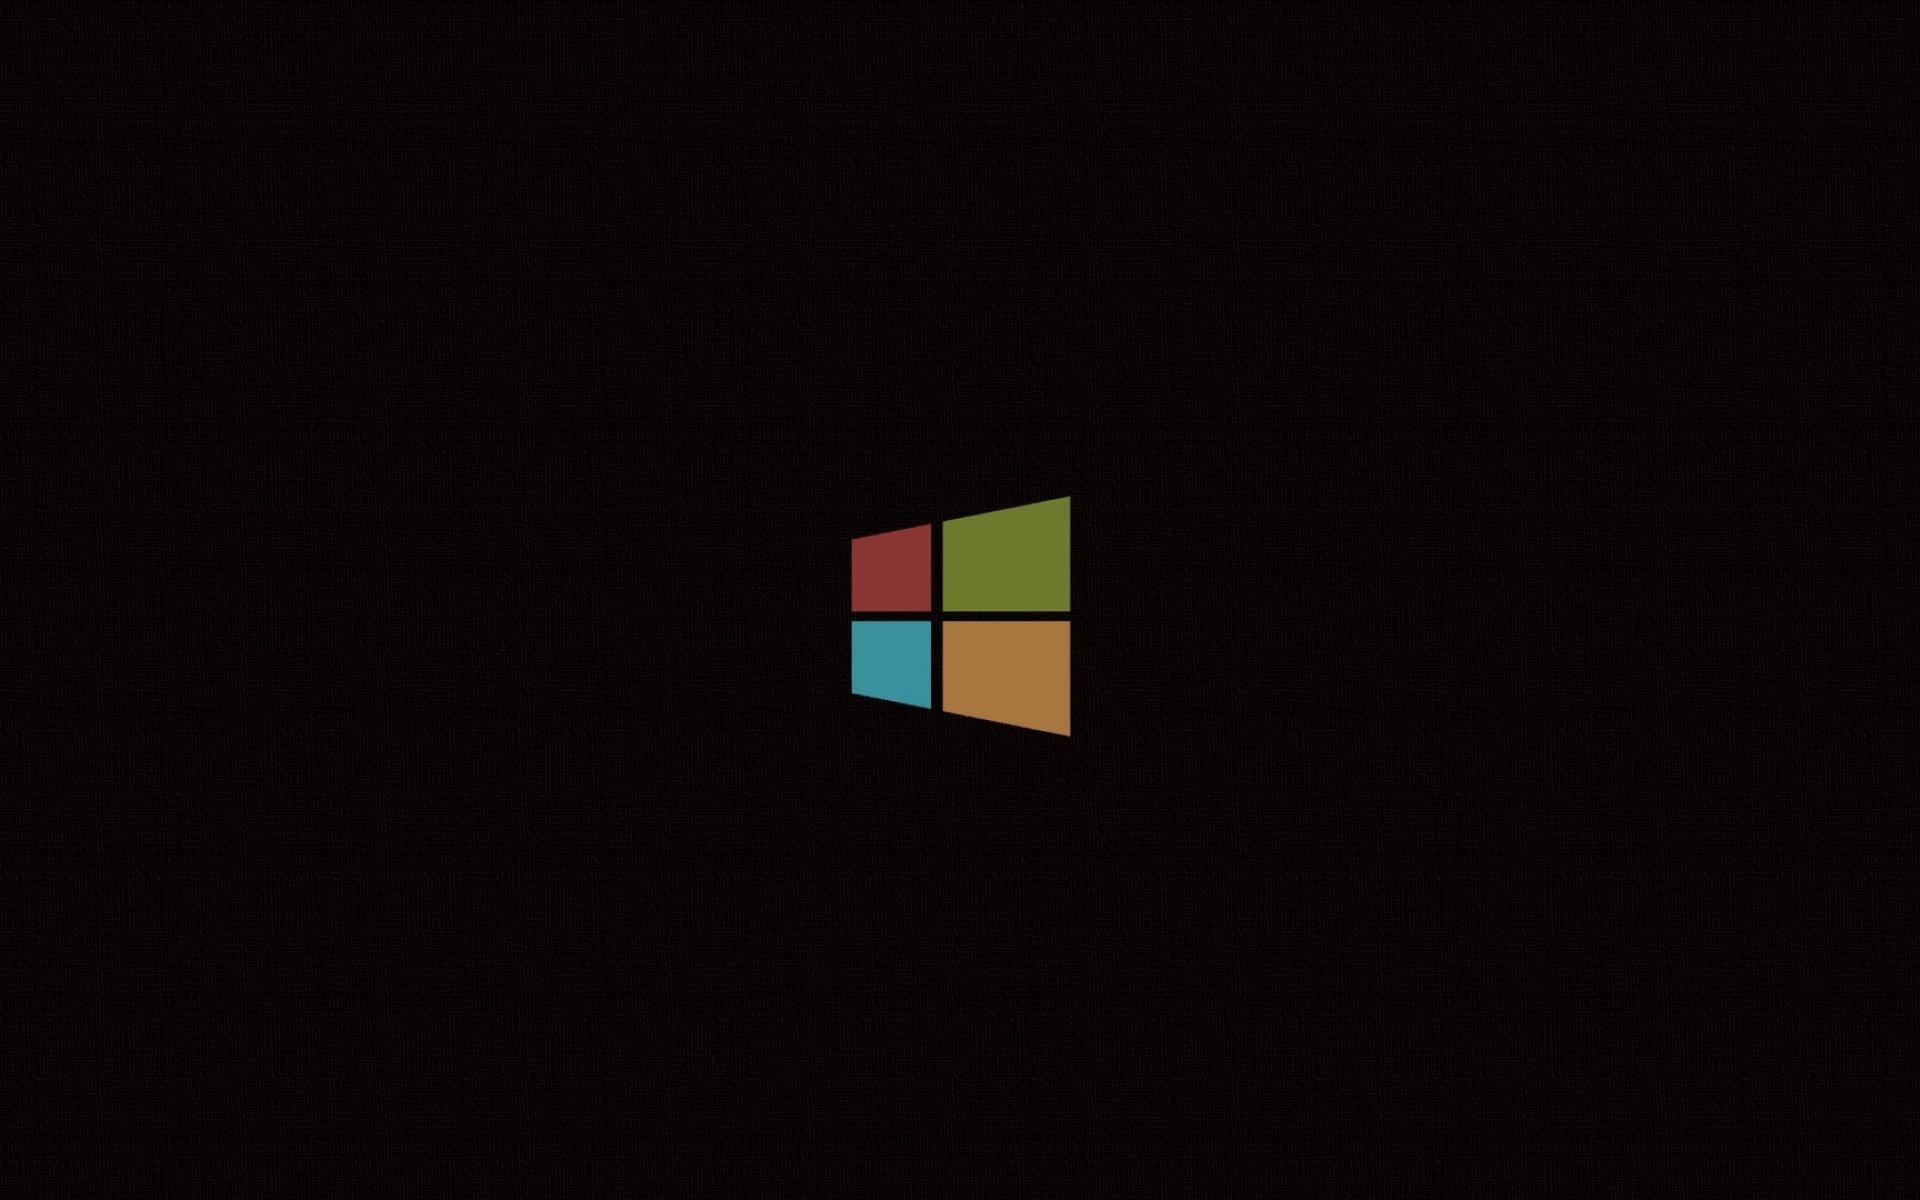 Minimalistic windows 8 logos simple background black wallpaper